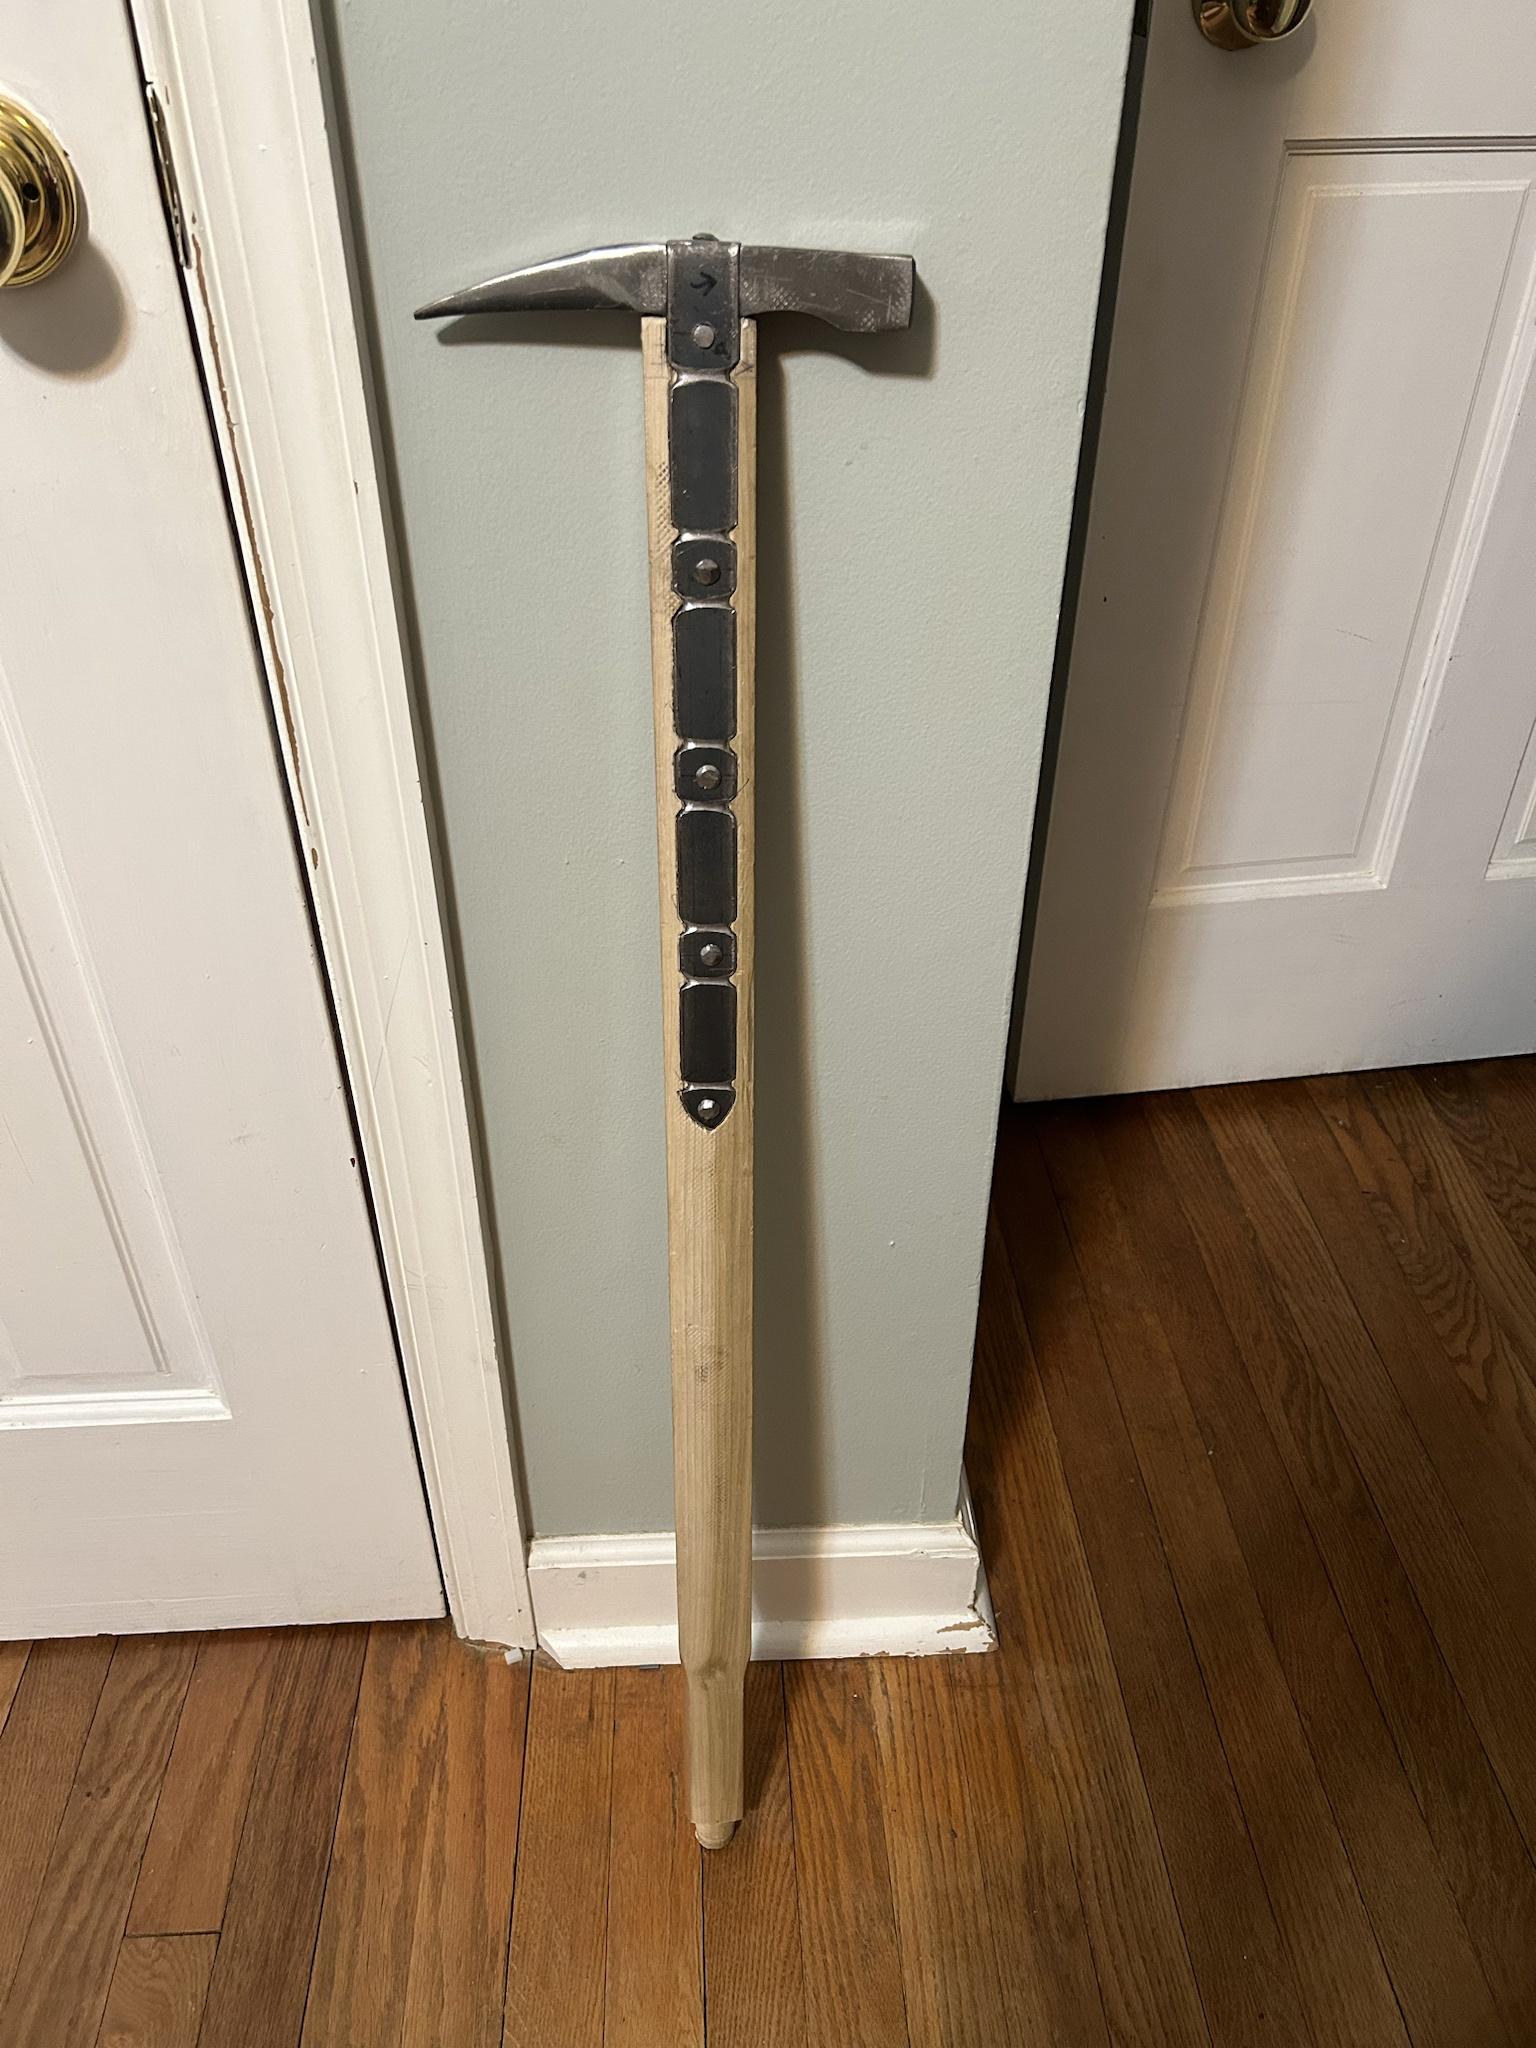 Partial progress of a diy English battle hammer